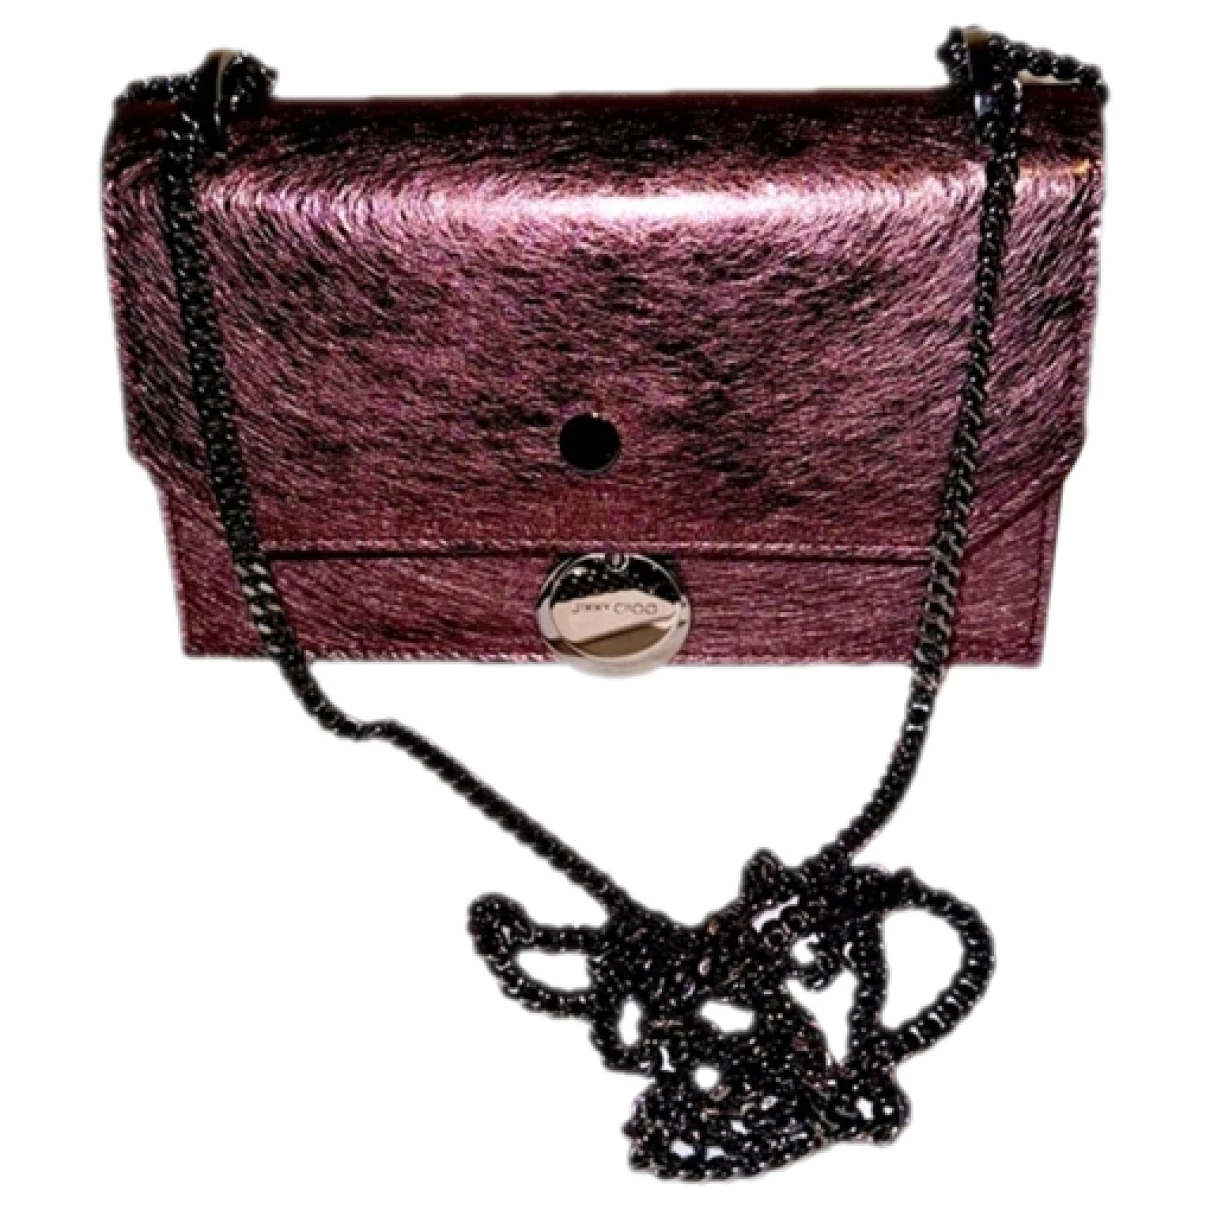 Pre-owned Jimmy Choo Leather Handbag In Purple